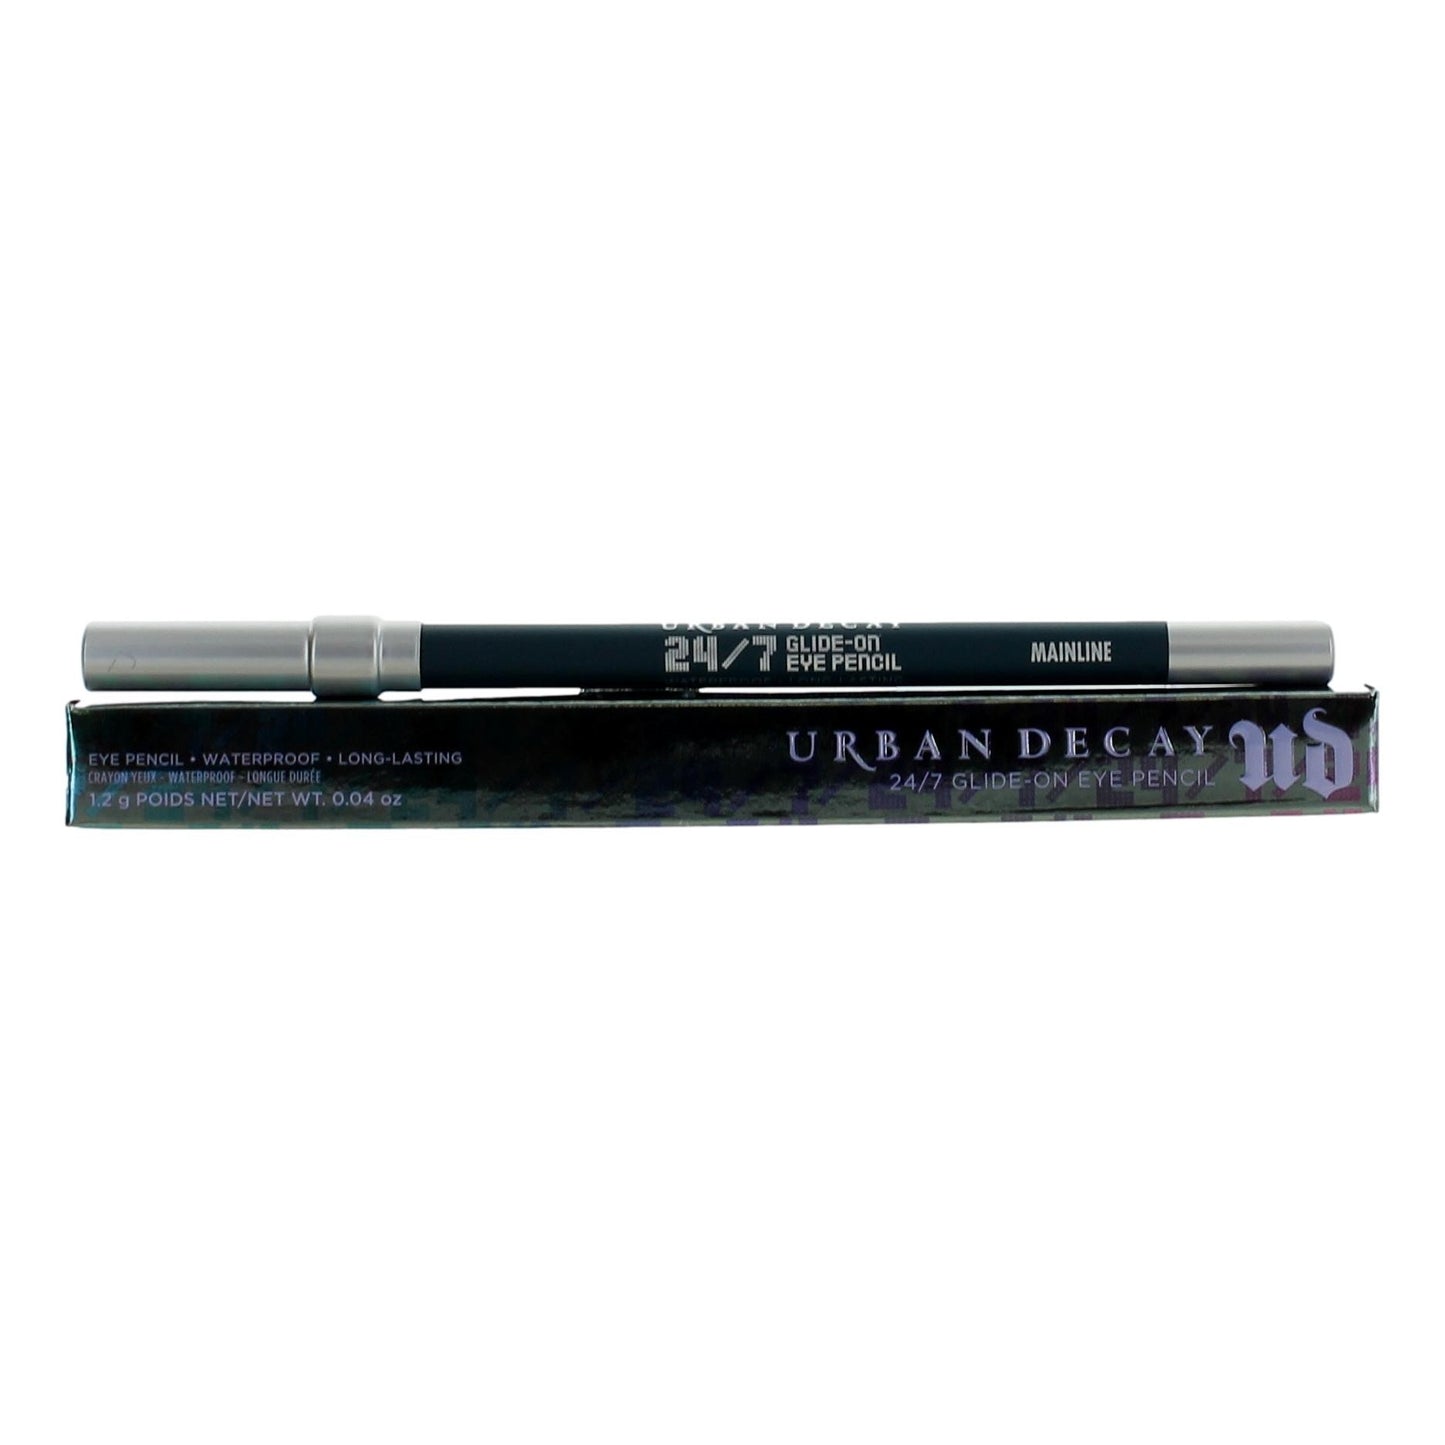 Urban Decay 24/7 Glide On Eye Pencil, .04oz Waterproof Eye Pencil - Mainline - Mainline